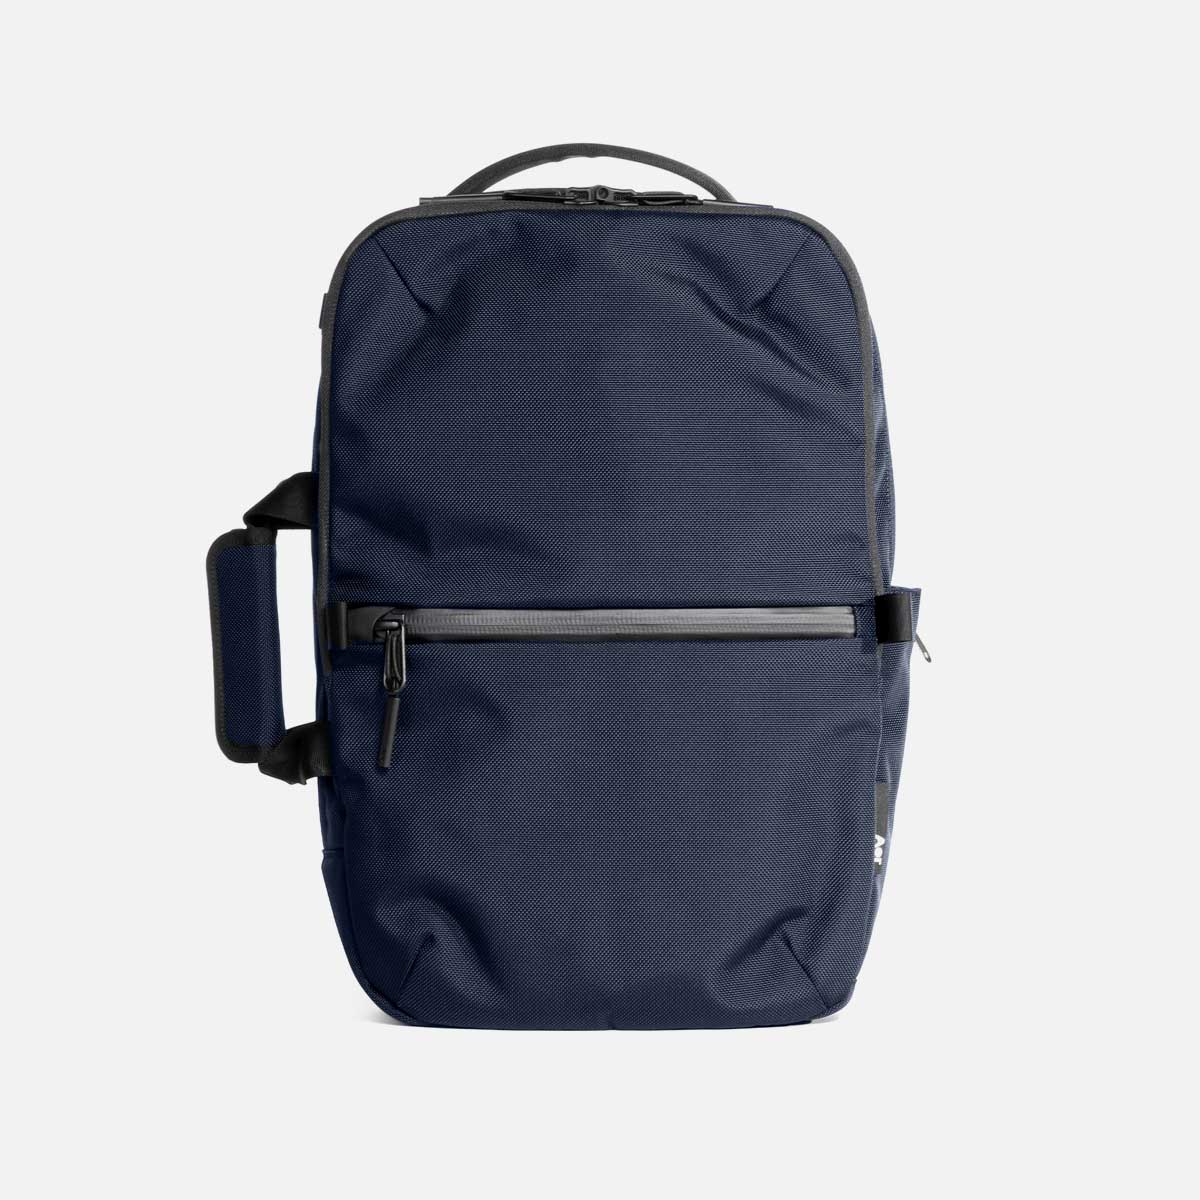 15/" Laptop Computer Sleeve Bag with 2 Top Pockets /& Shoulder Strap Handle 3010